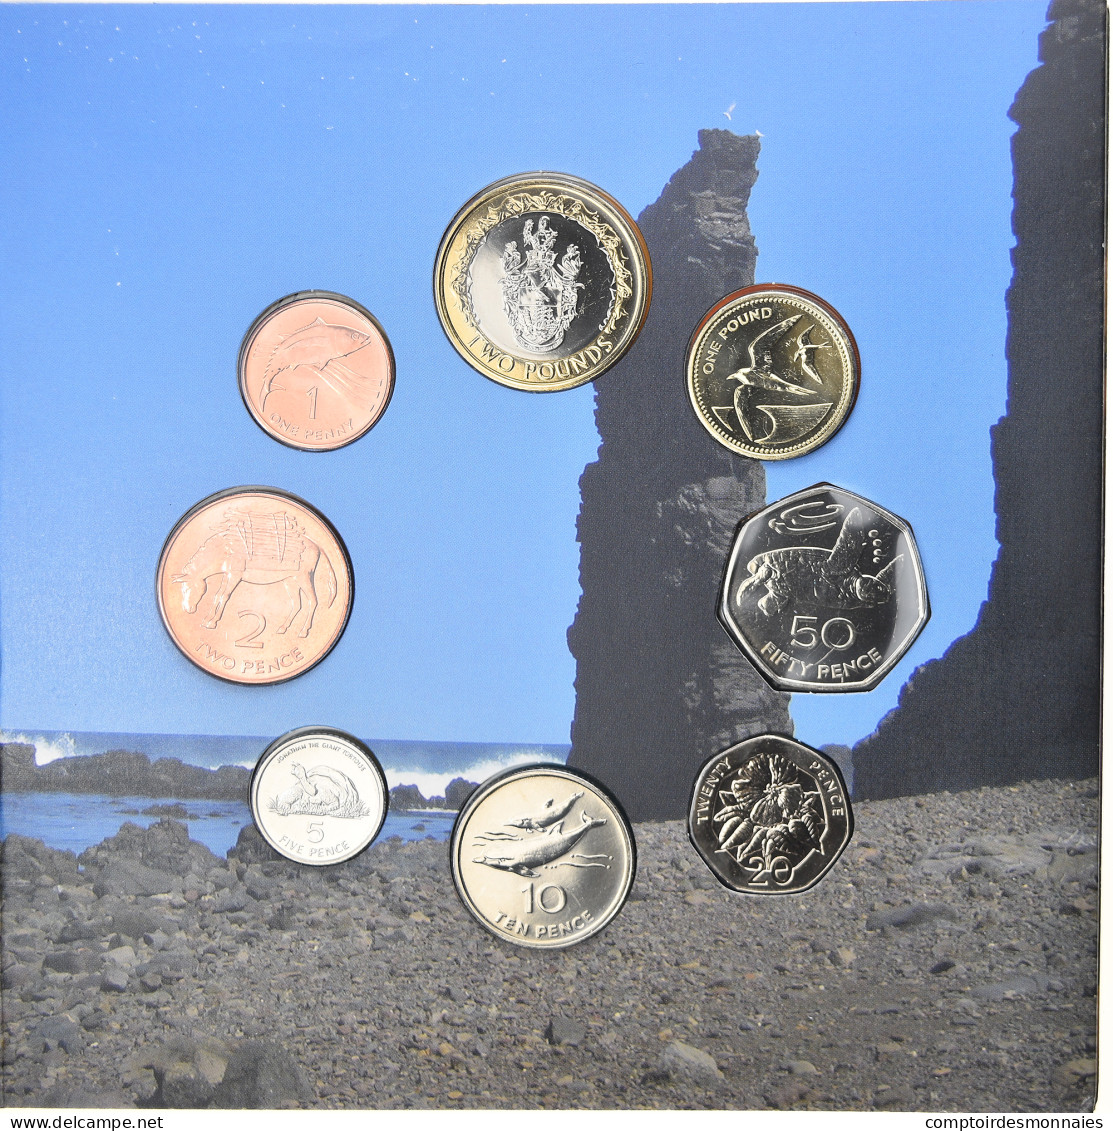 Monnaie, SAINT HELENA & ASCENSION, Coffret, 2003, FDC - Saint Helena Island